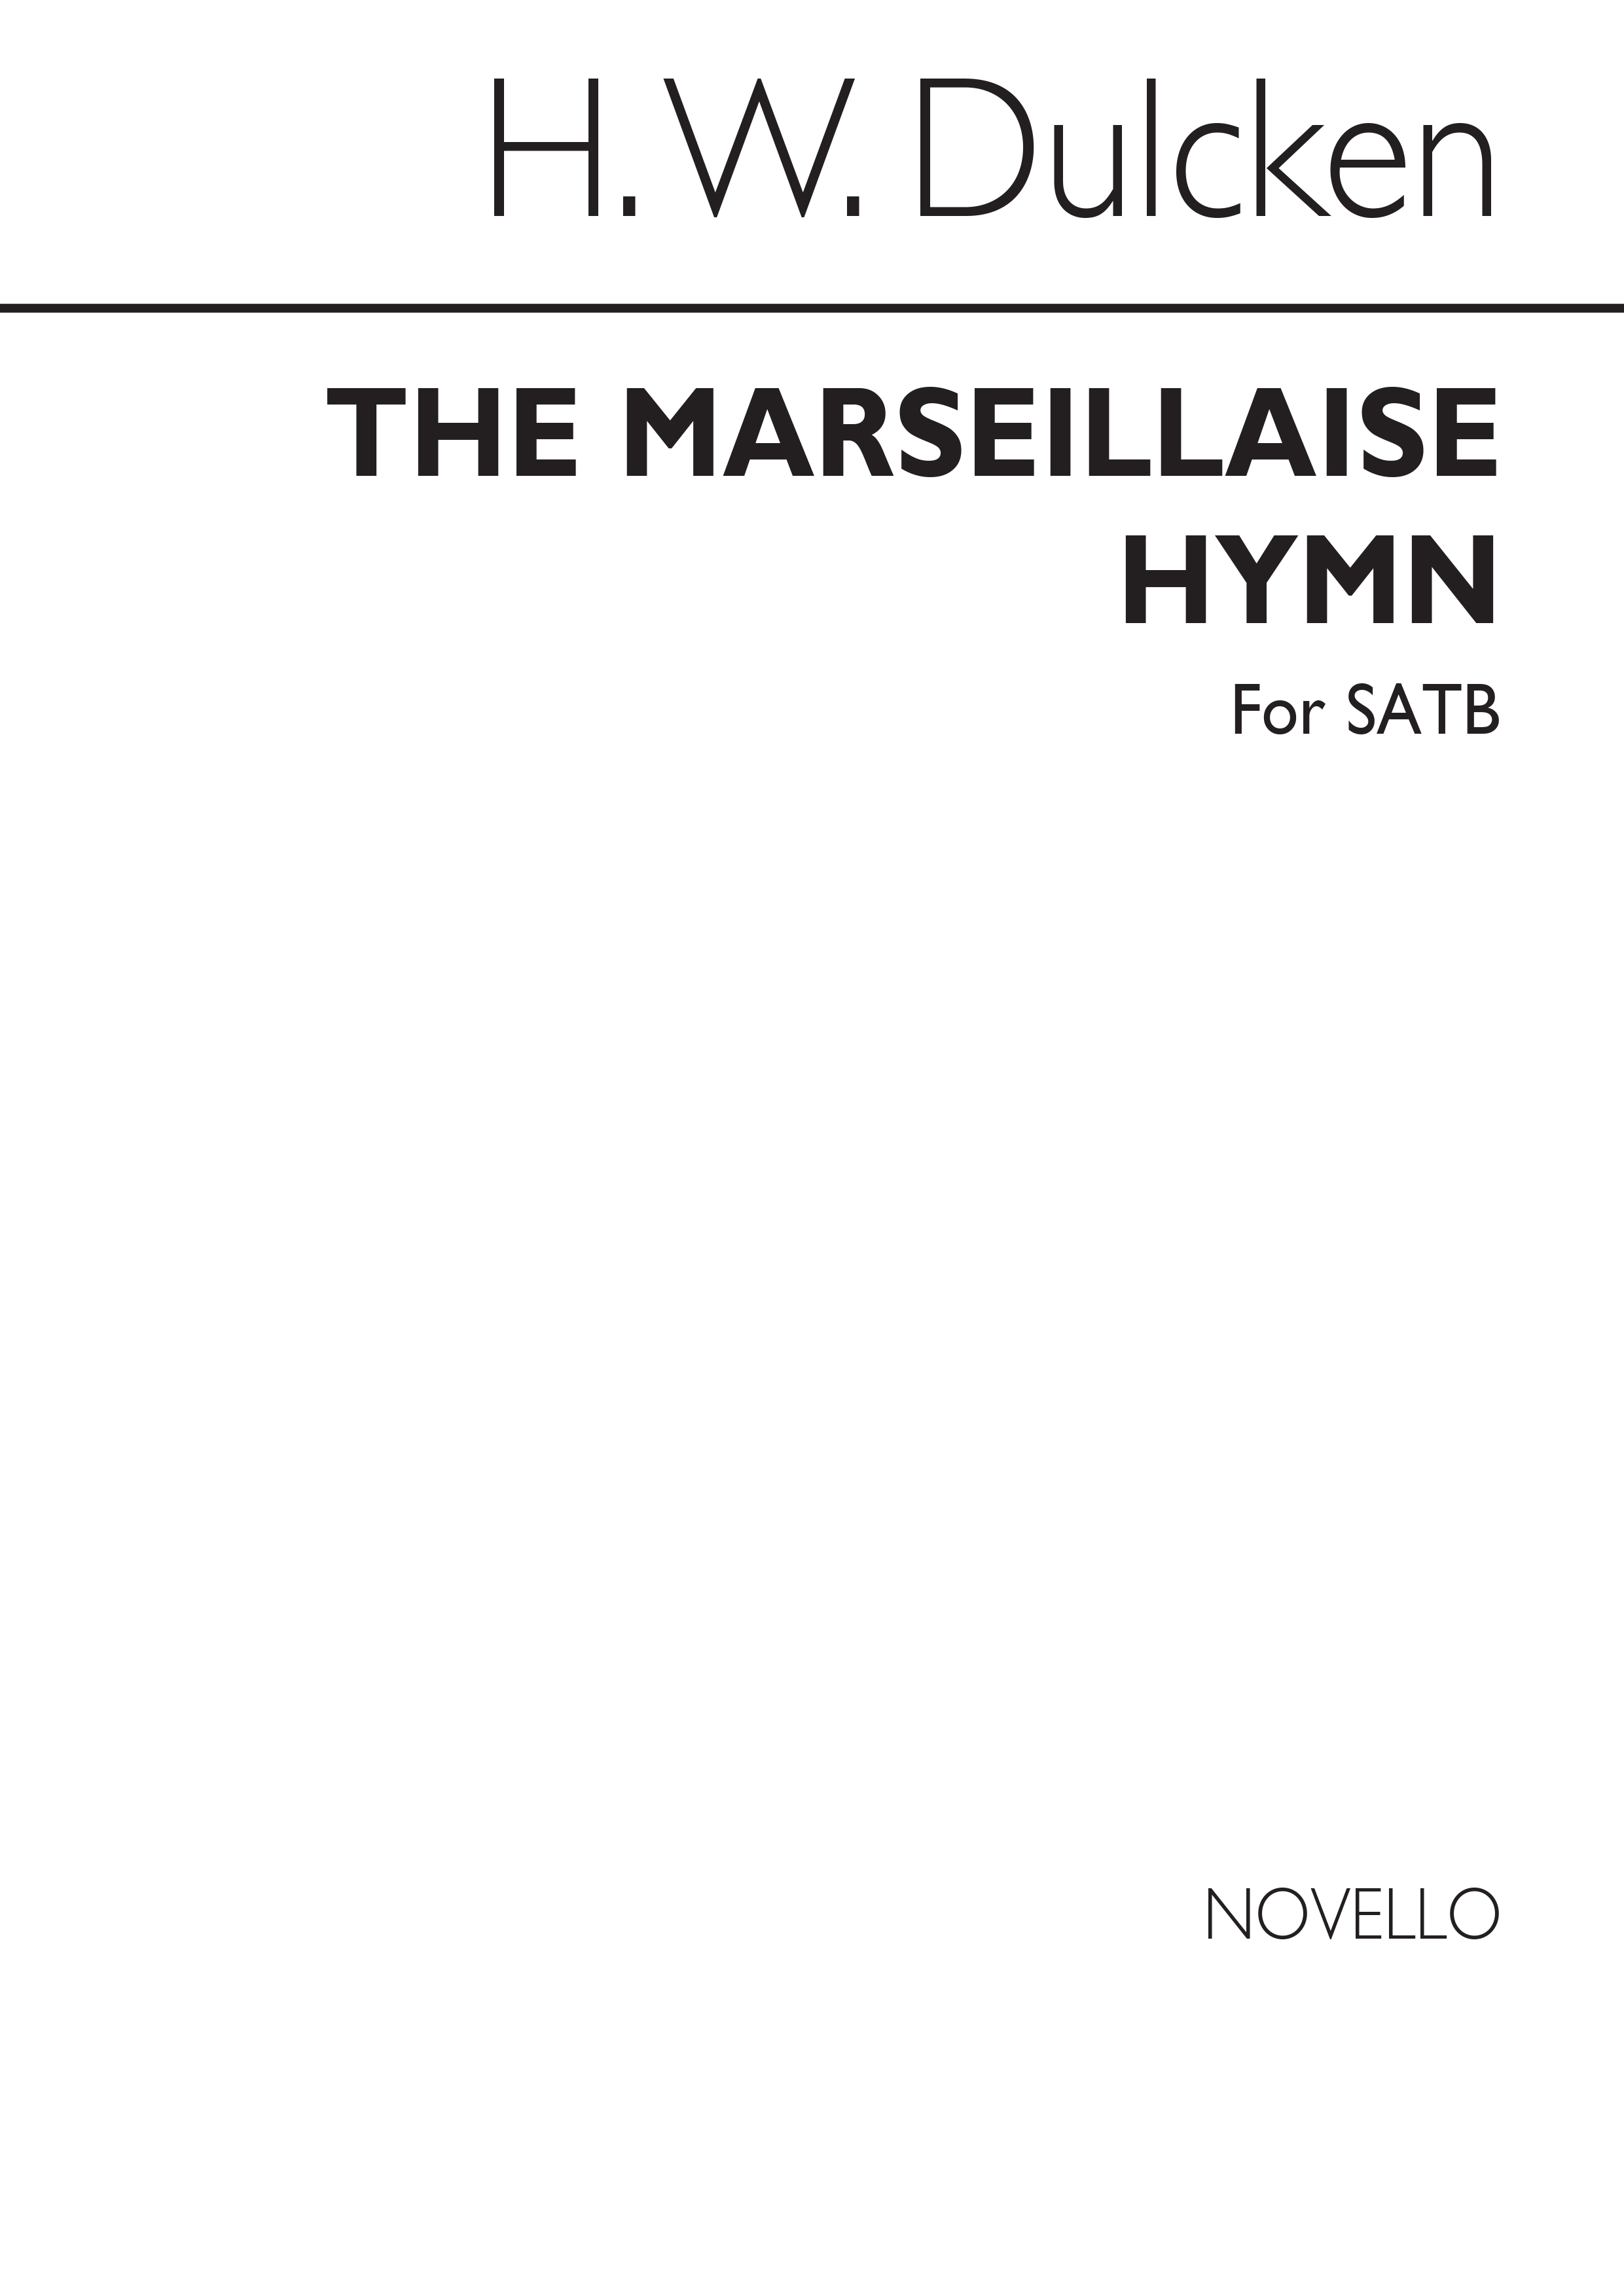 Dulcken: Dulcken The Marseillaise Hymn Satb: SATB: Vocal Score